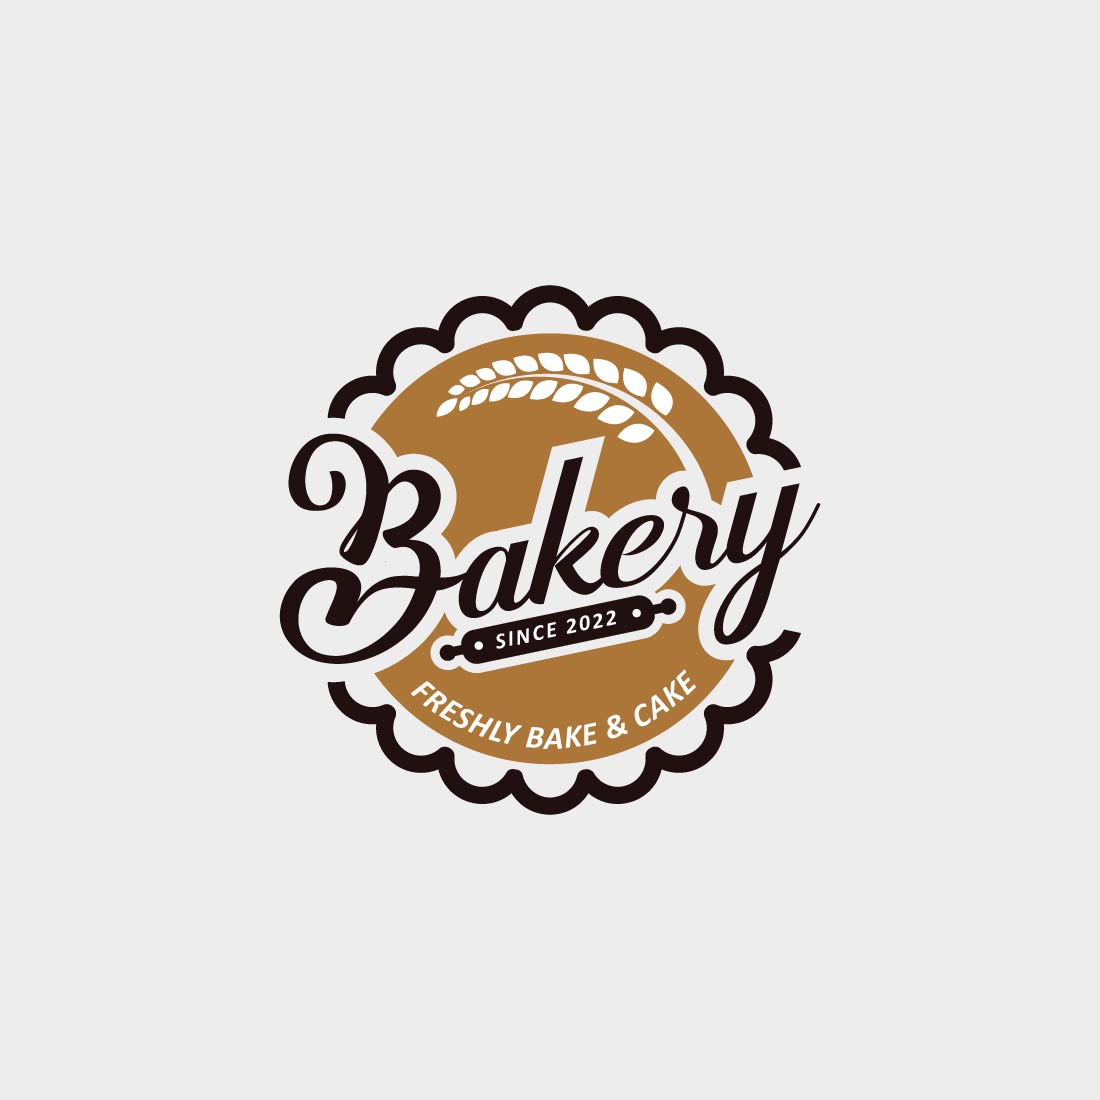 Vintage retro bakery logo badge or label Vector Image